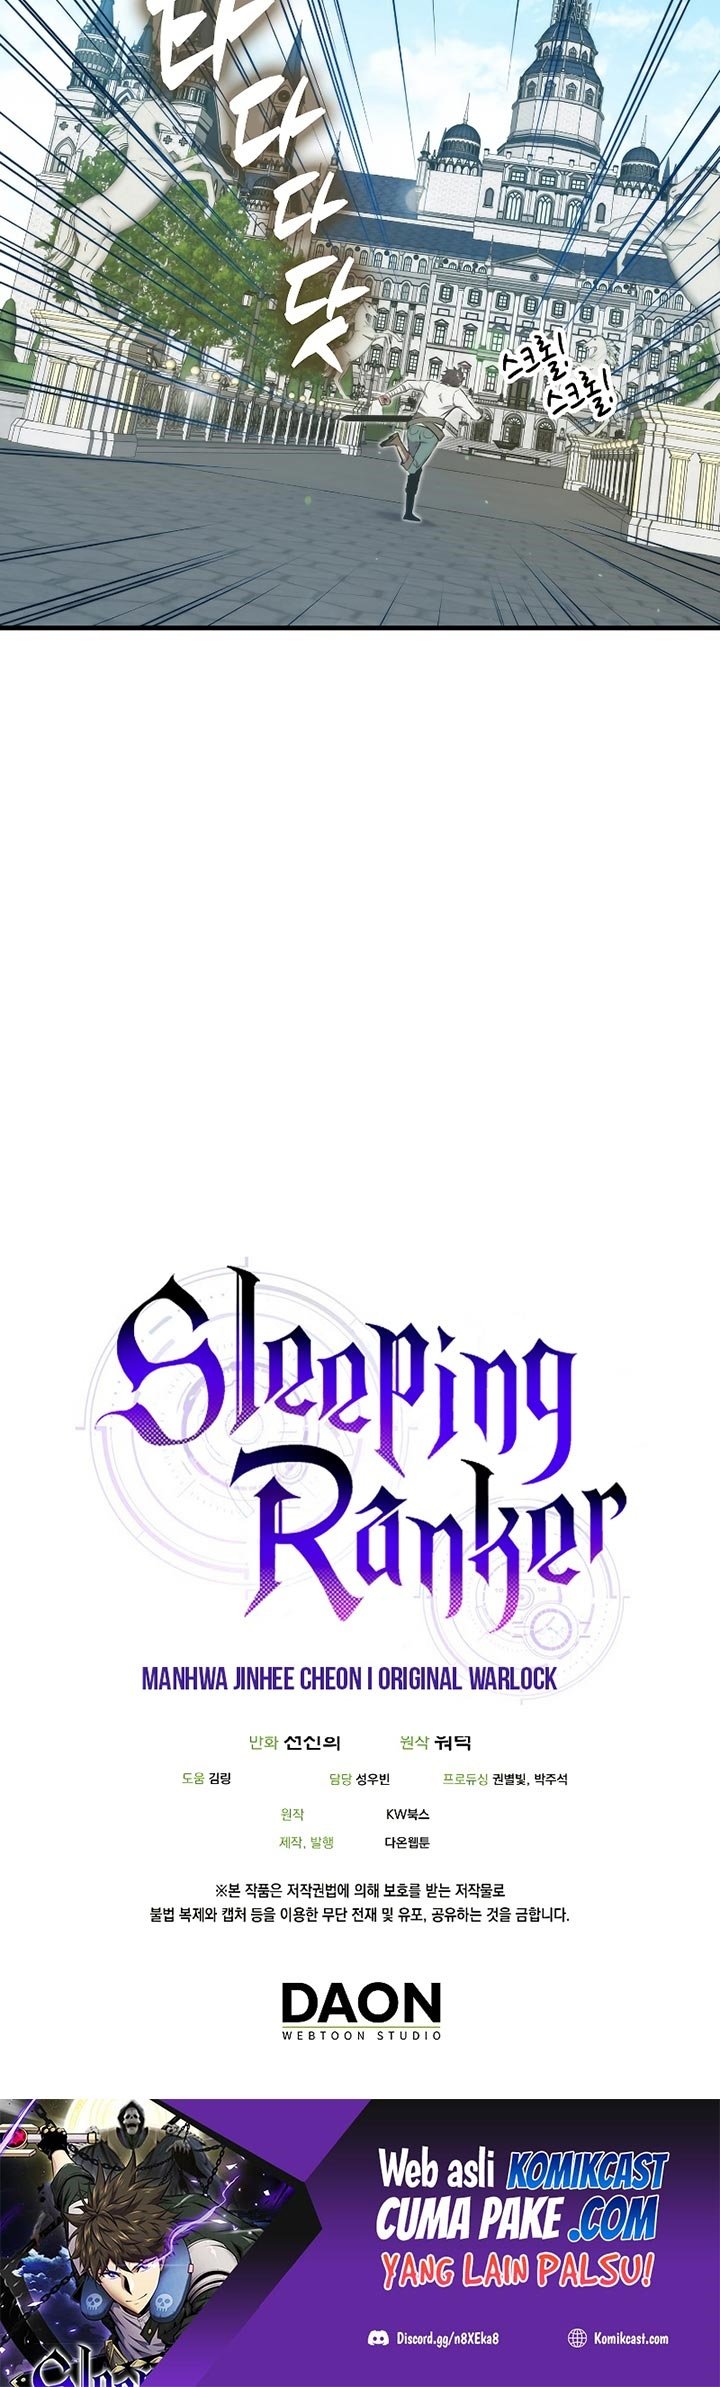 Sleeping Ranker Chapter 24